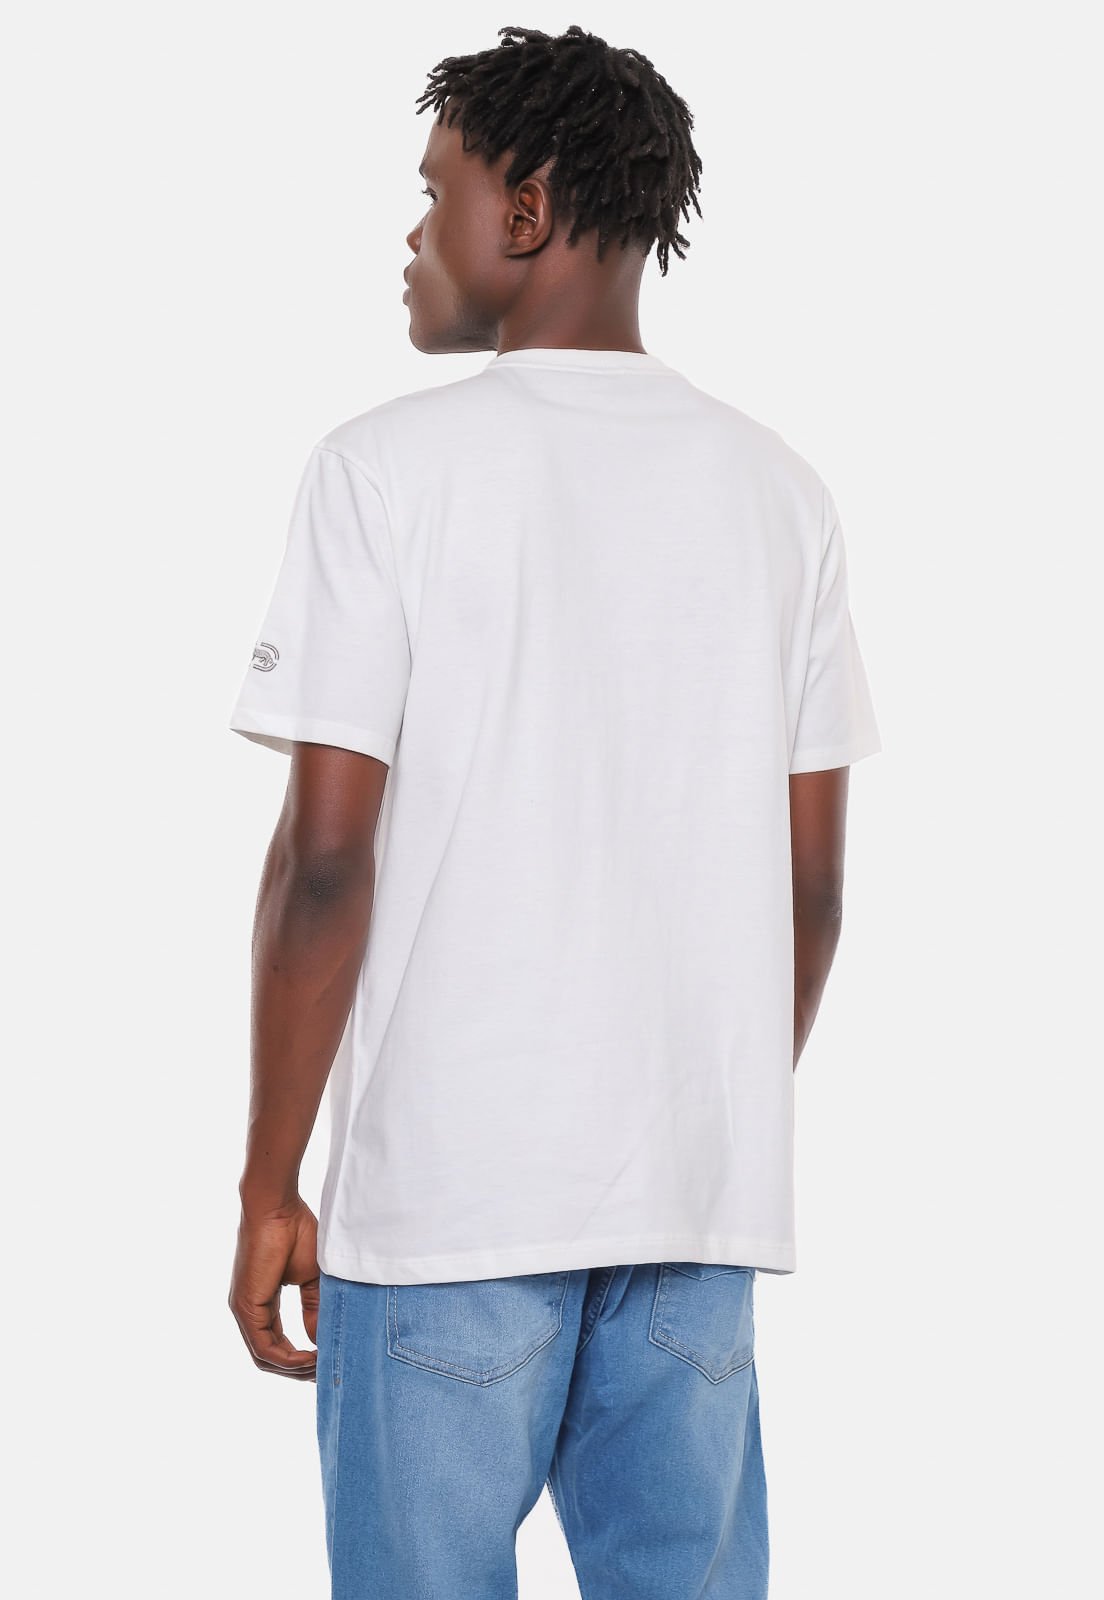 Camiseta Ecko Estampada Branca Off Branco 2